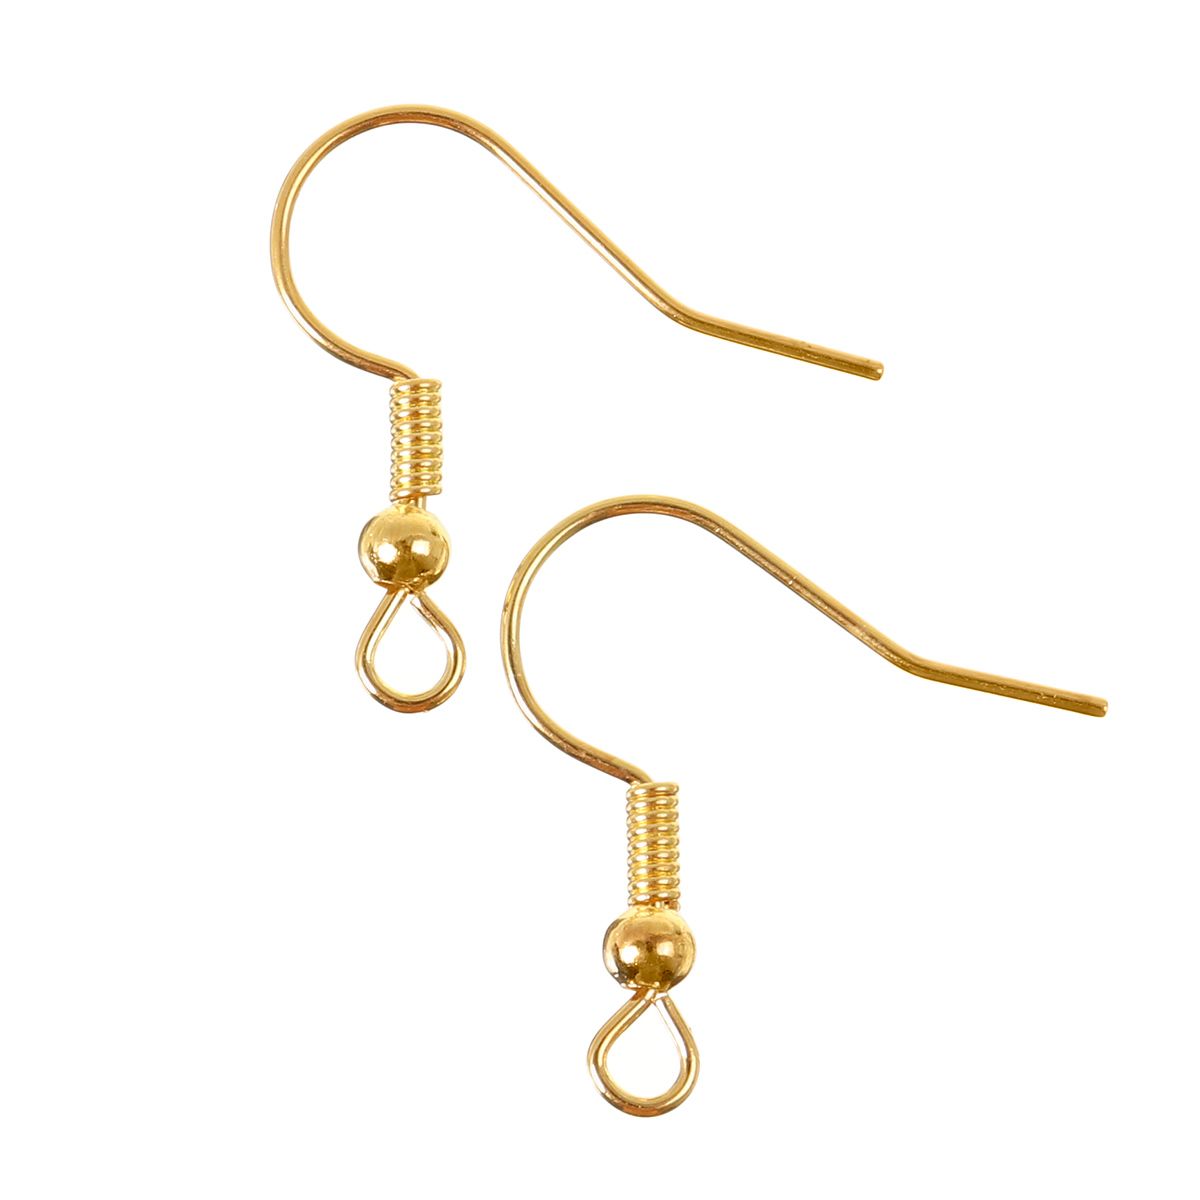 1488pcs-DIY-Necklace-Jewelry-Pendant-Earrings-Ring-Making-Set-Handmade-Craft-1704625